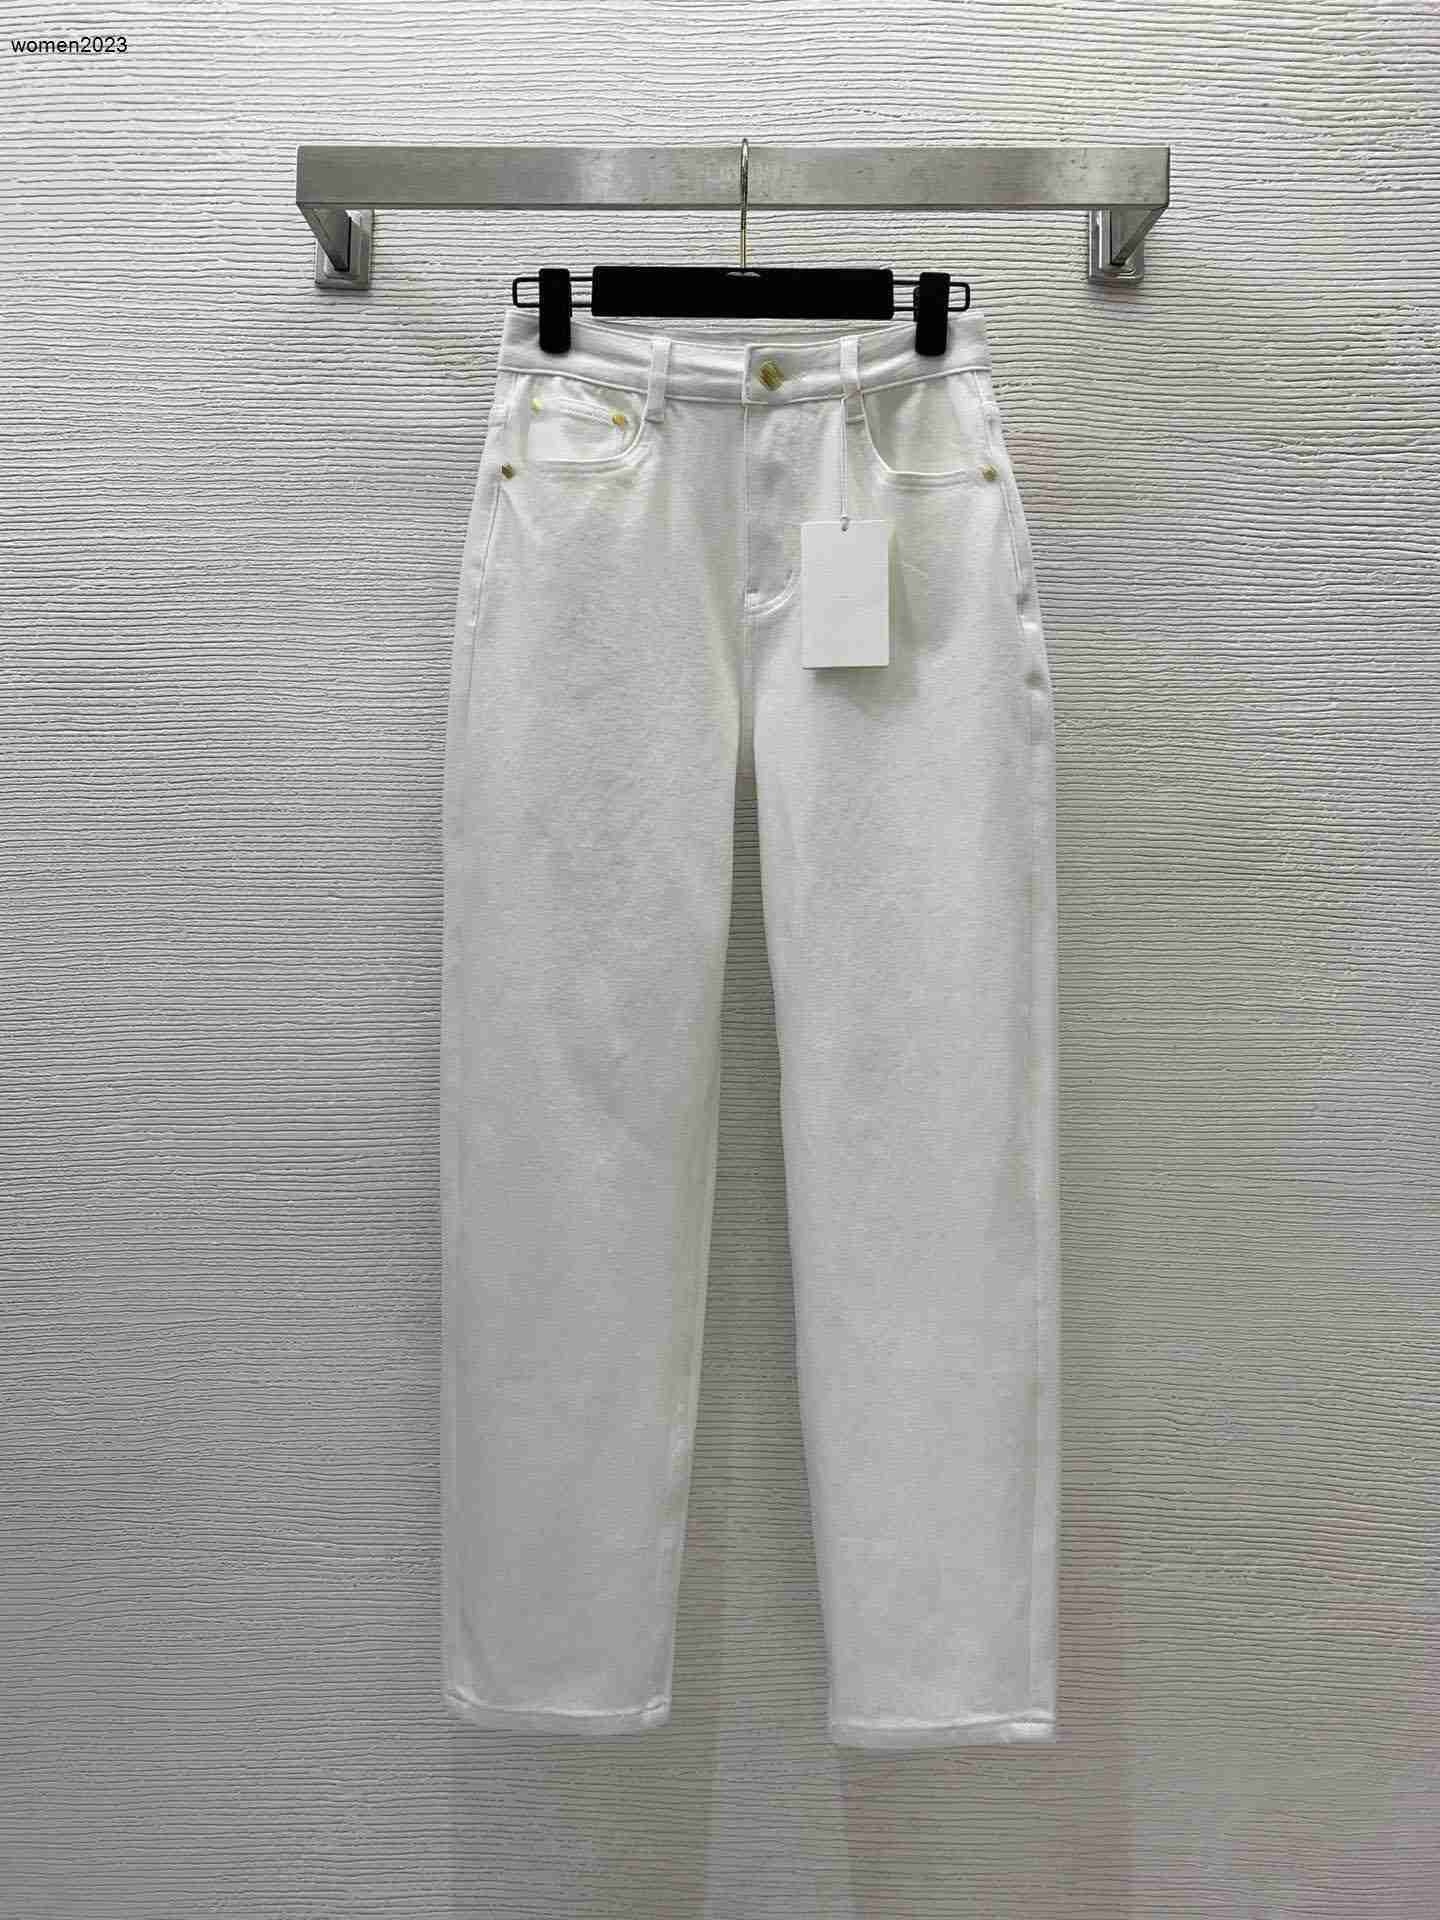 #4-white jeans